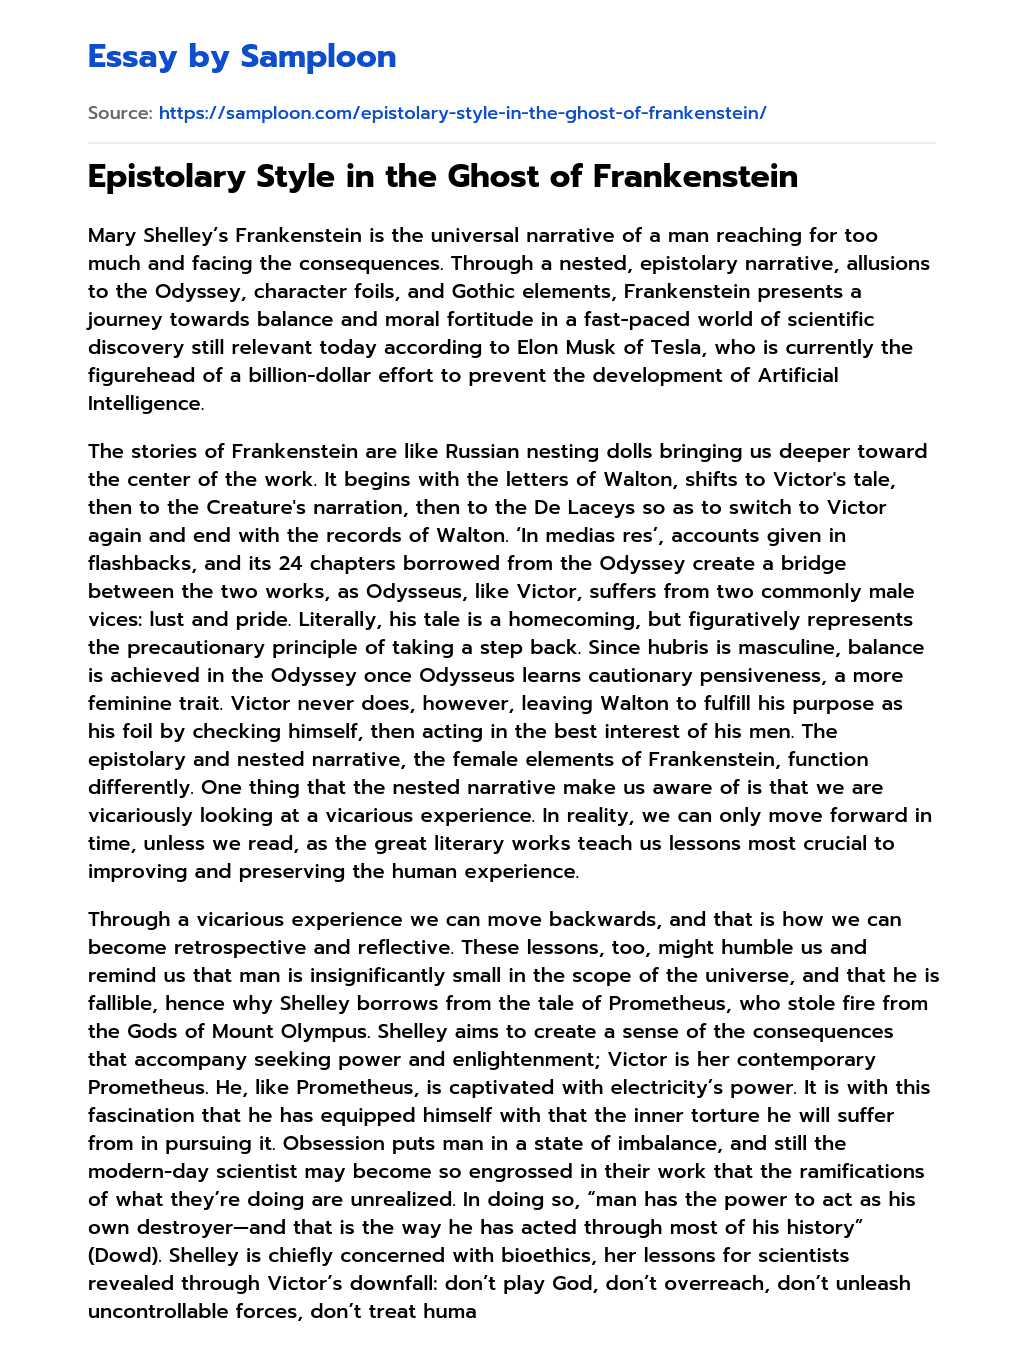 Epistolary Style in the Ghost of Frankenstein essay